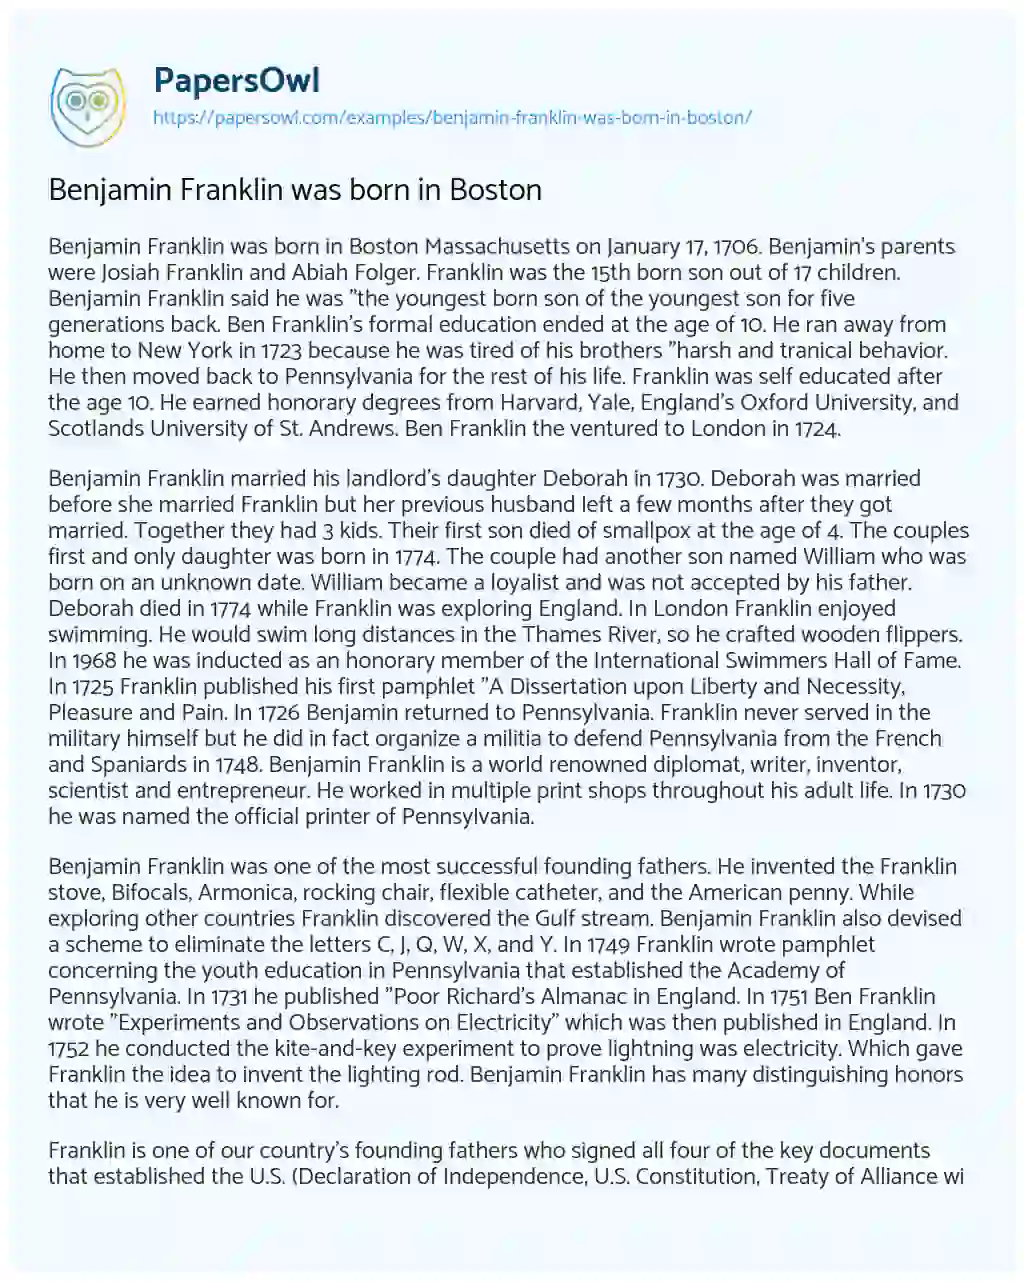 Essay on Benjamin Franklin was Born in Boston